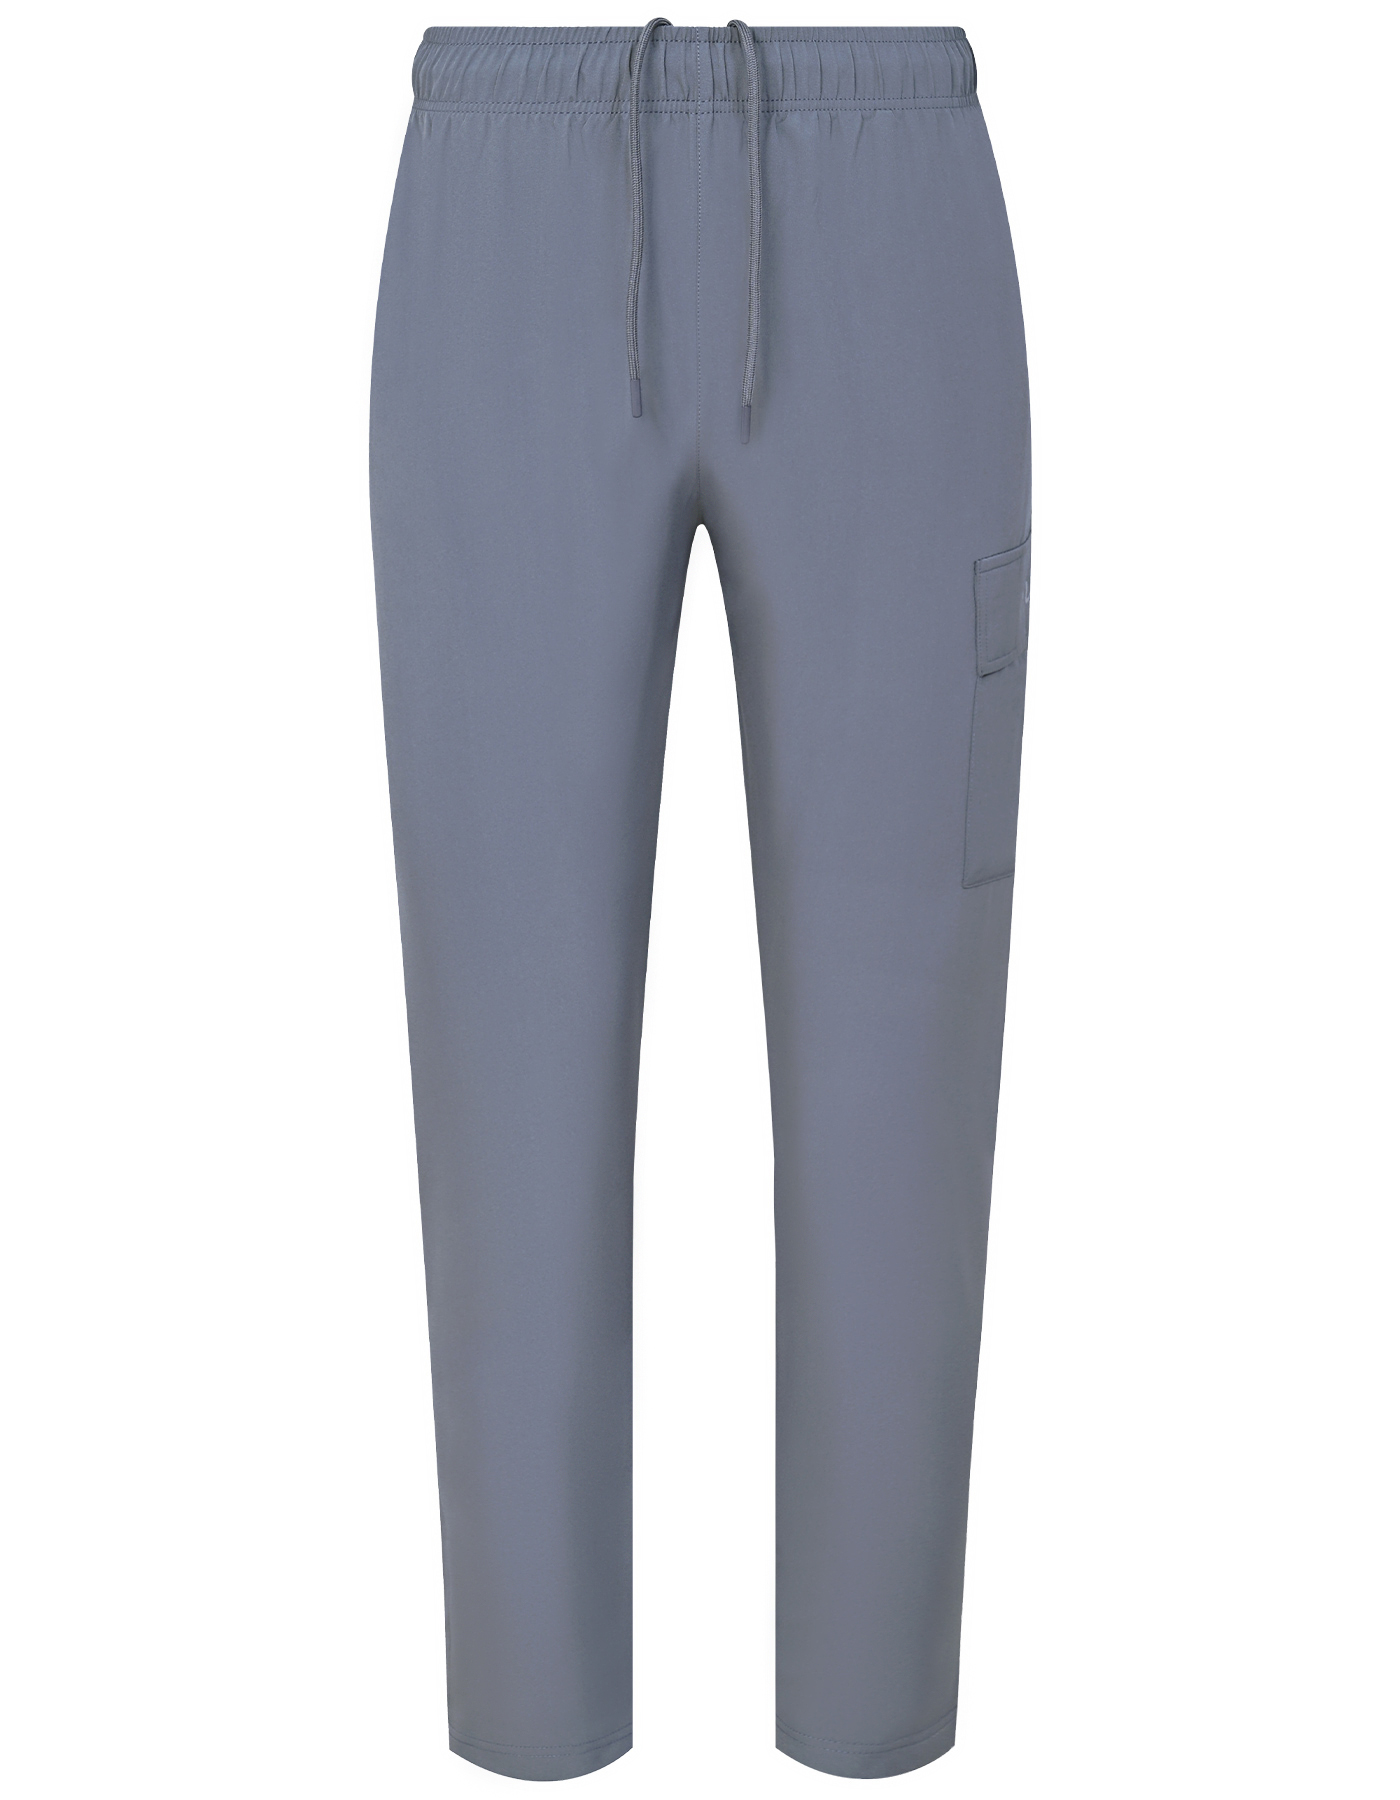 Gym Trouser Grey FGTR2415 Cross Pocket Flat Front Uniworth